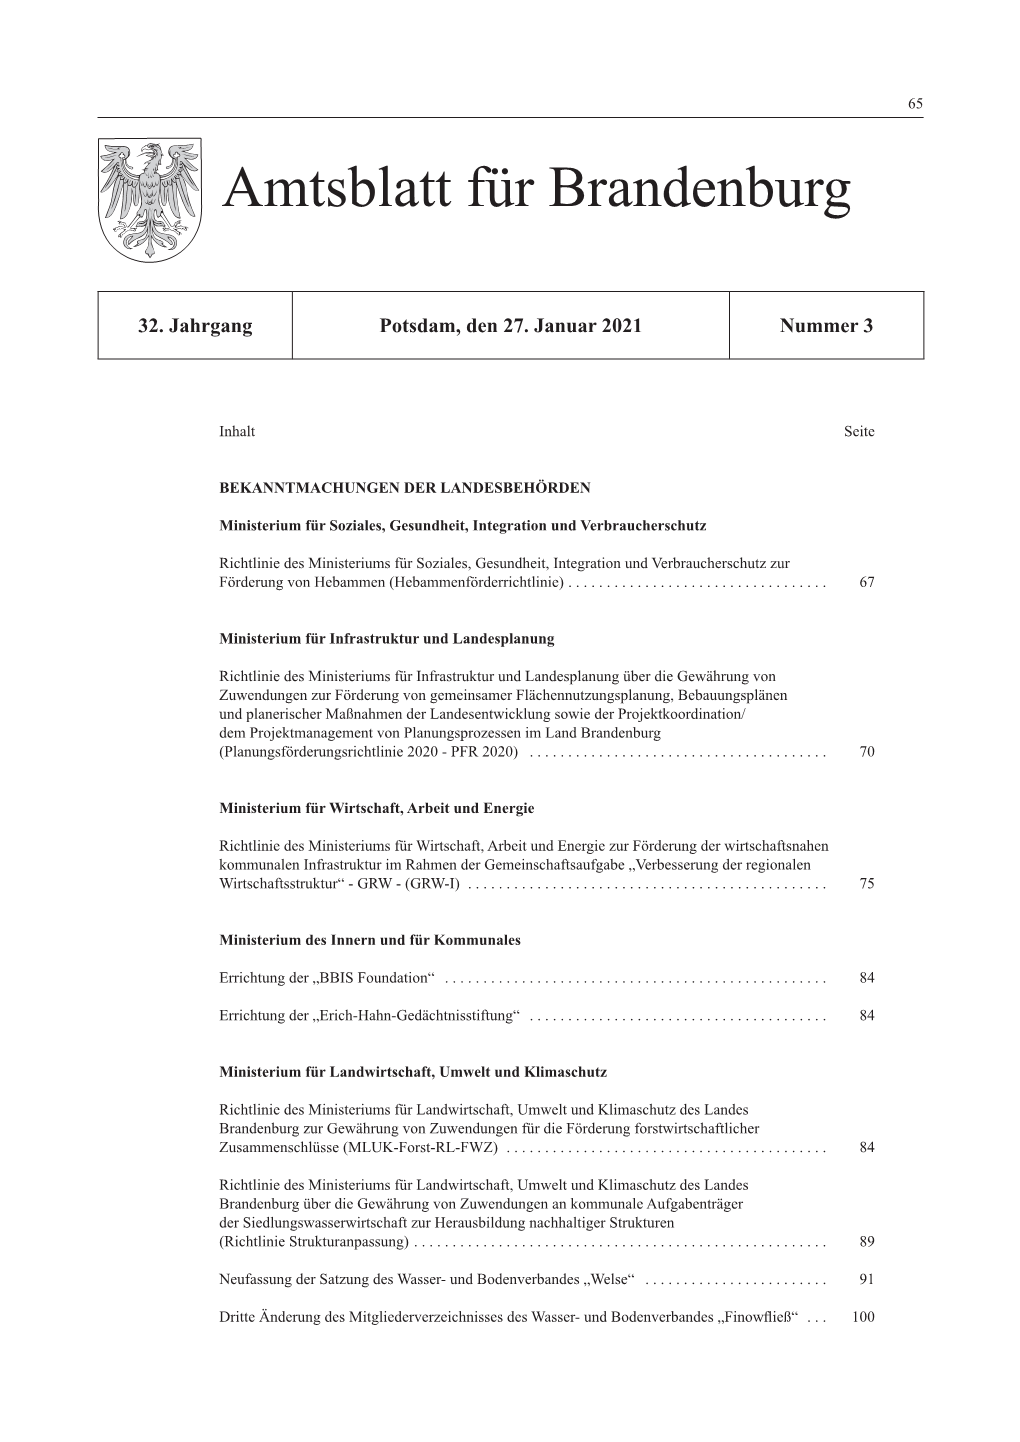 Amtsblatt Für Brandenburg, 2021, Nummer 3